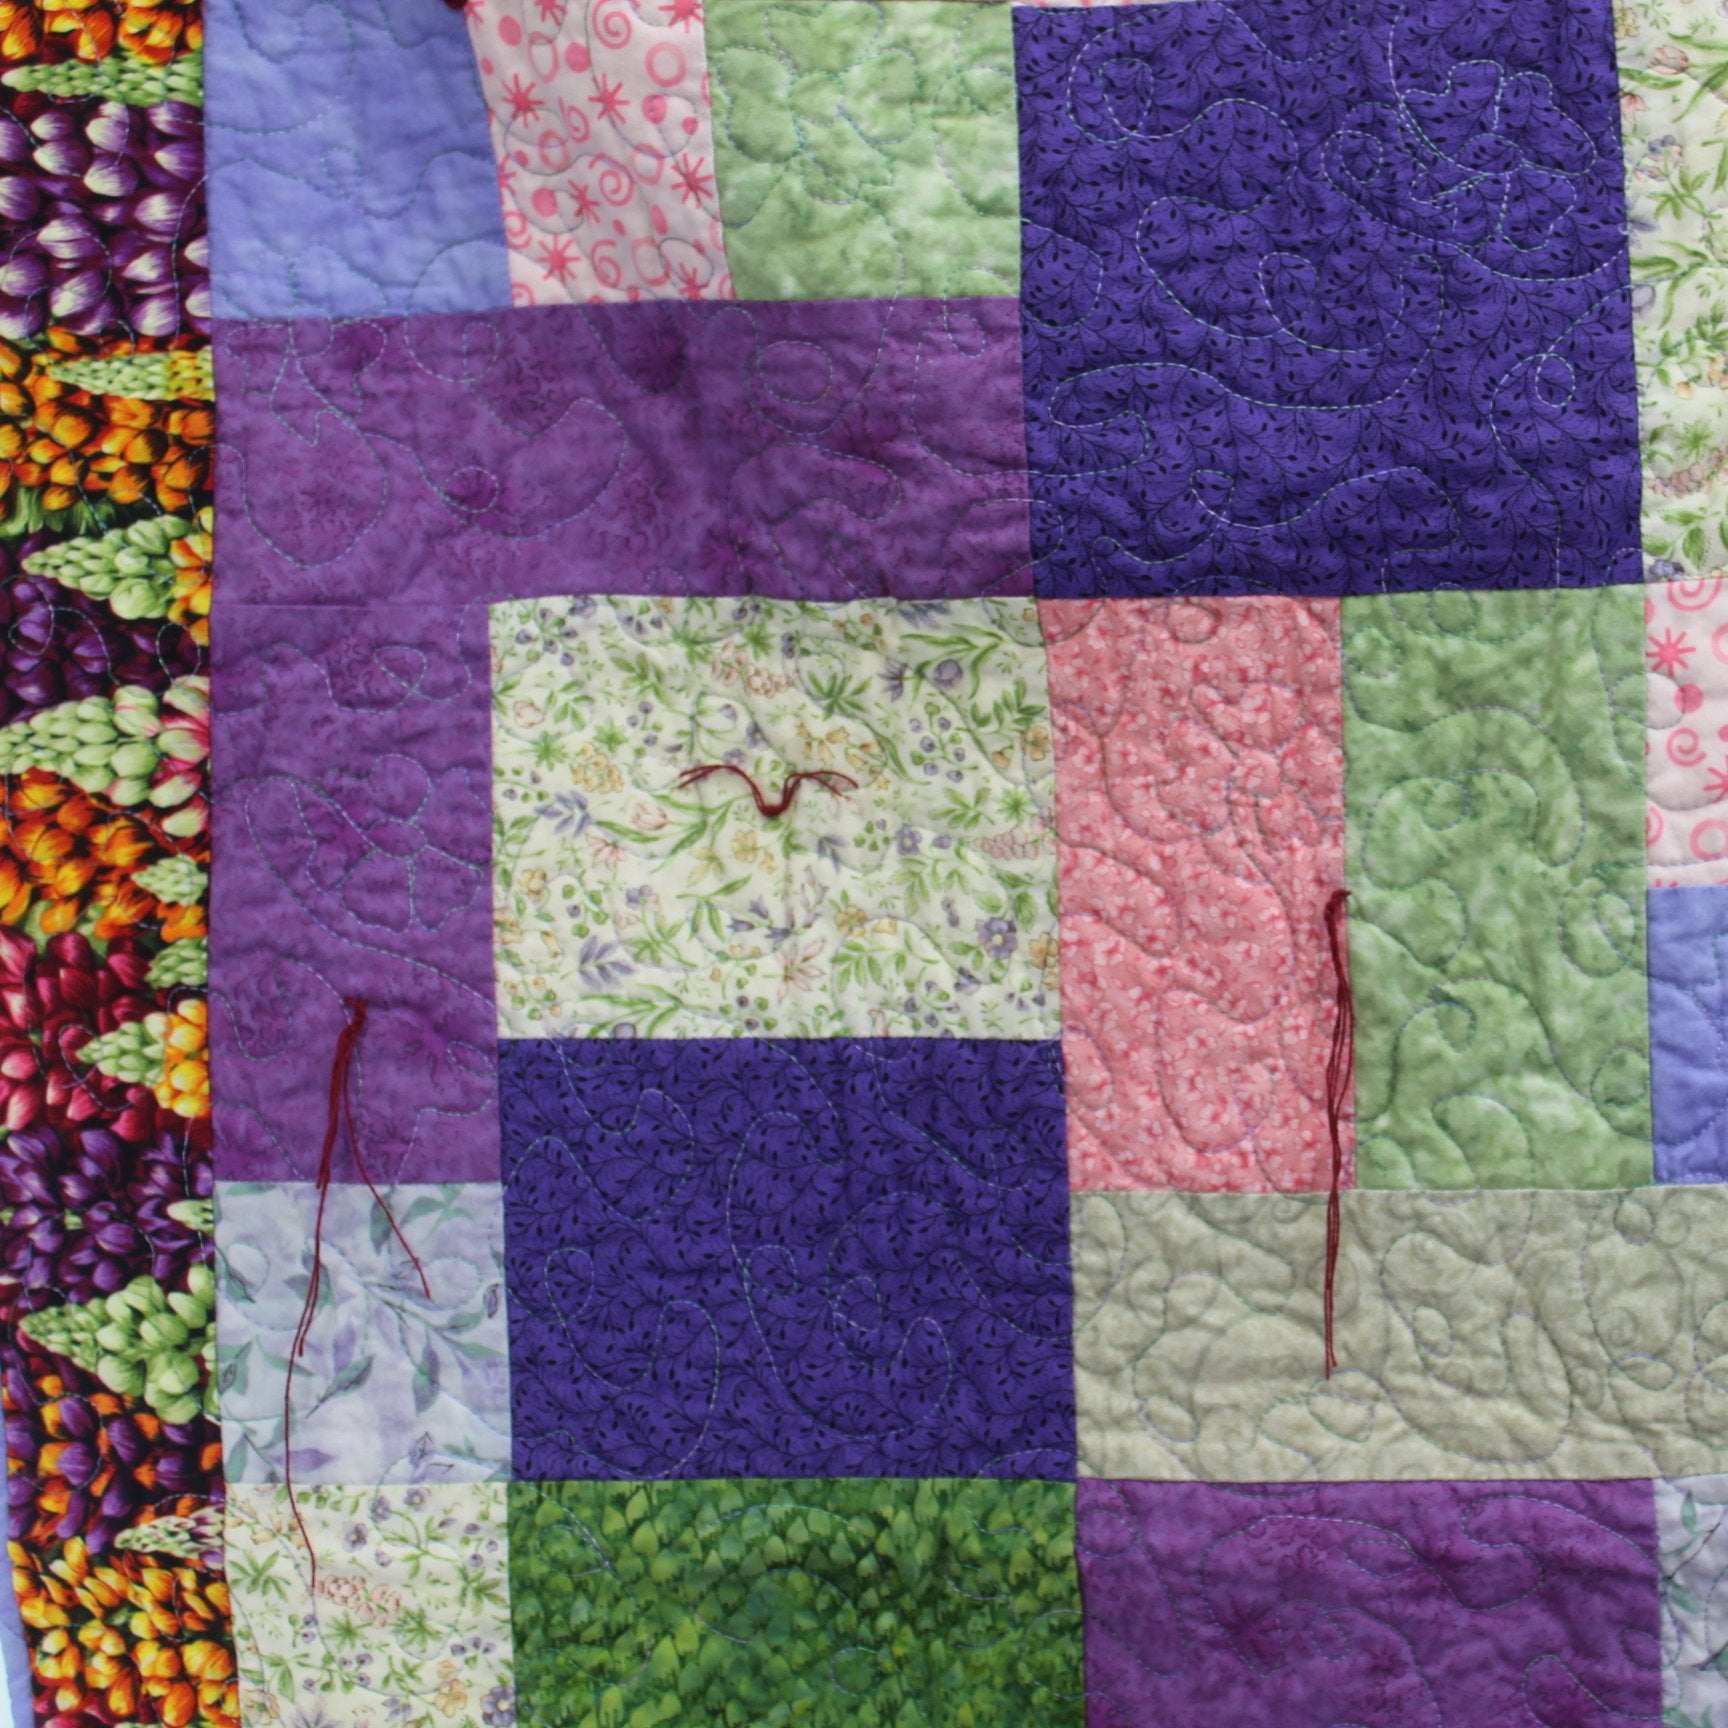 Small Quilt Crib Wheelchair Lap Blanket Methodist Church Gift Great Colors closeup fabric